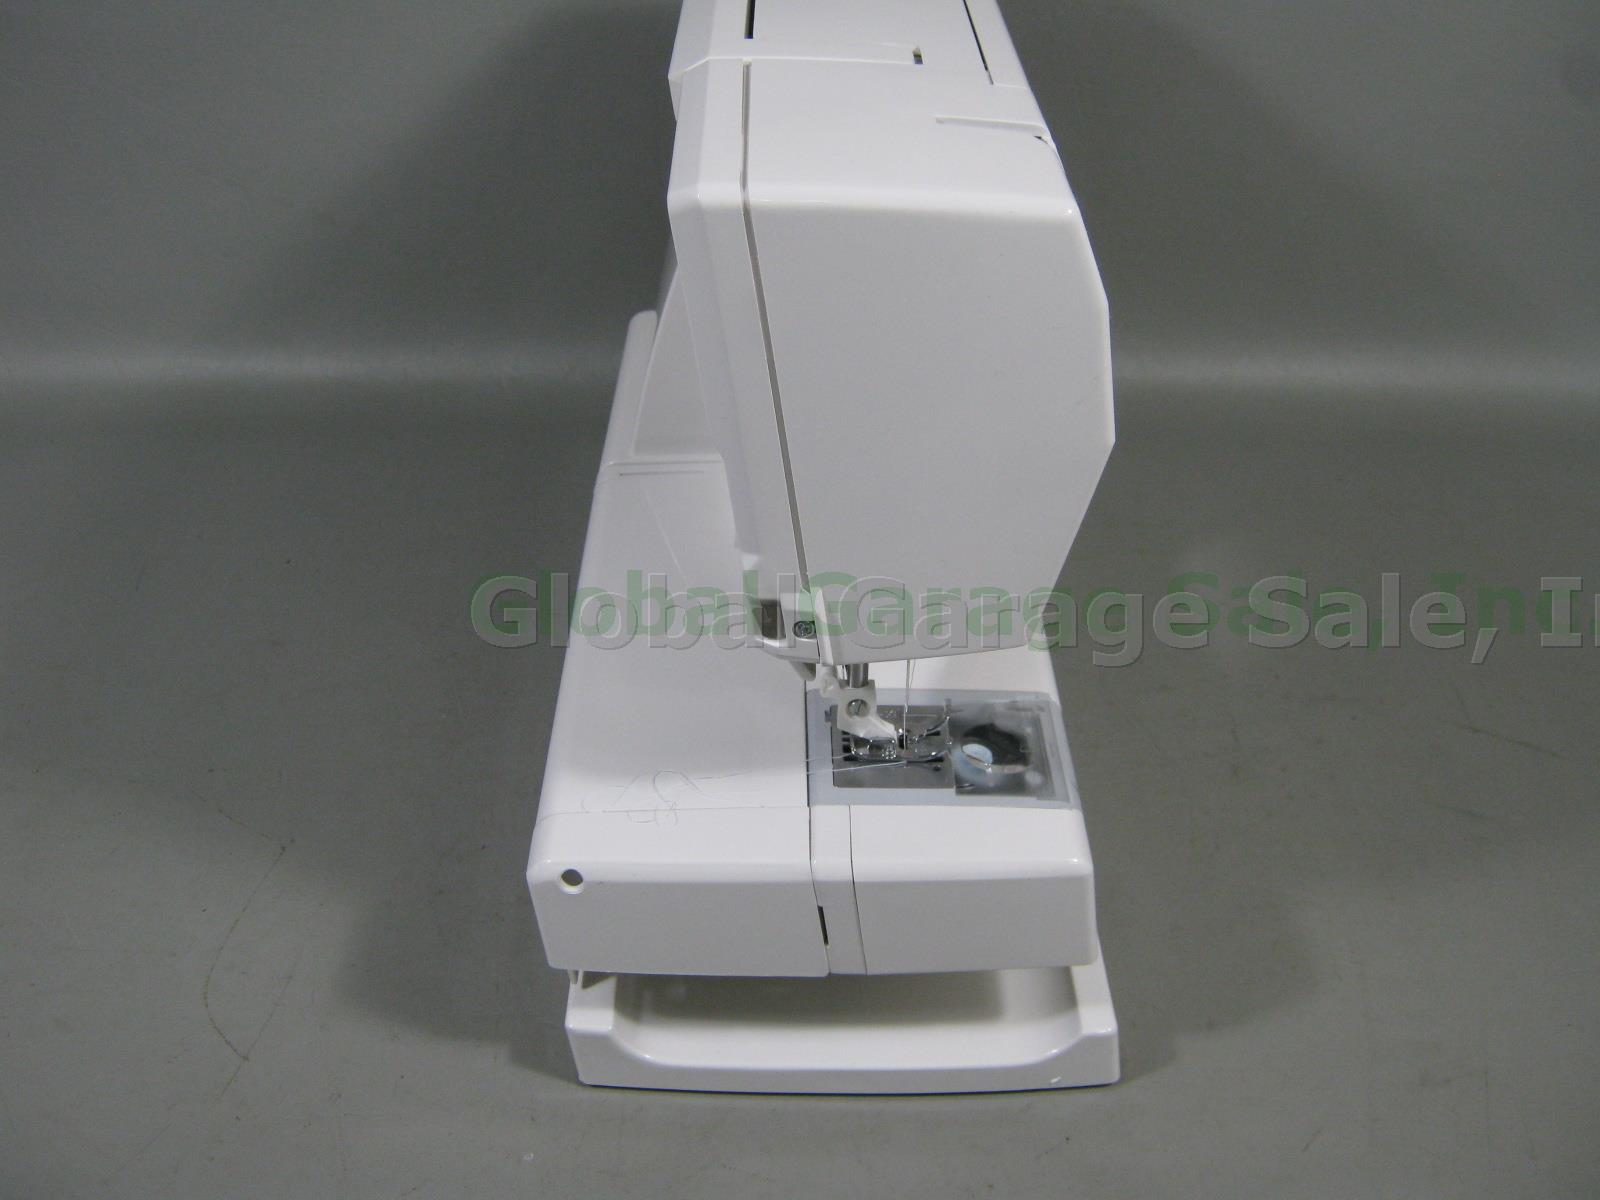 NEW Husqvarna Viking 230 Electronic Sewing Machine W/ Pedal Manual Cover Box Lot 5